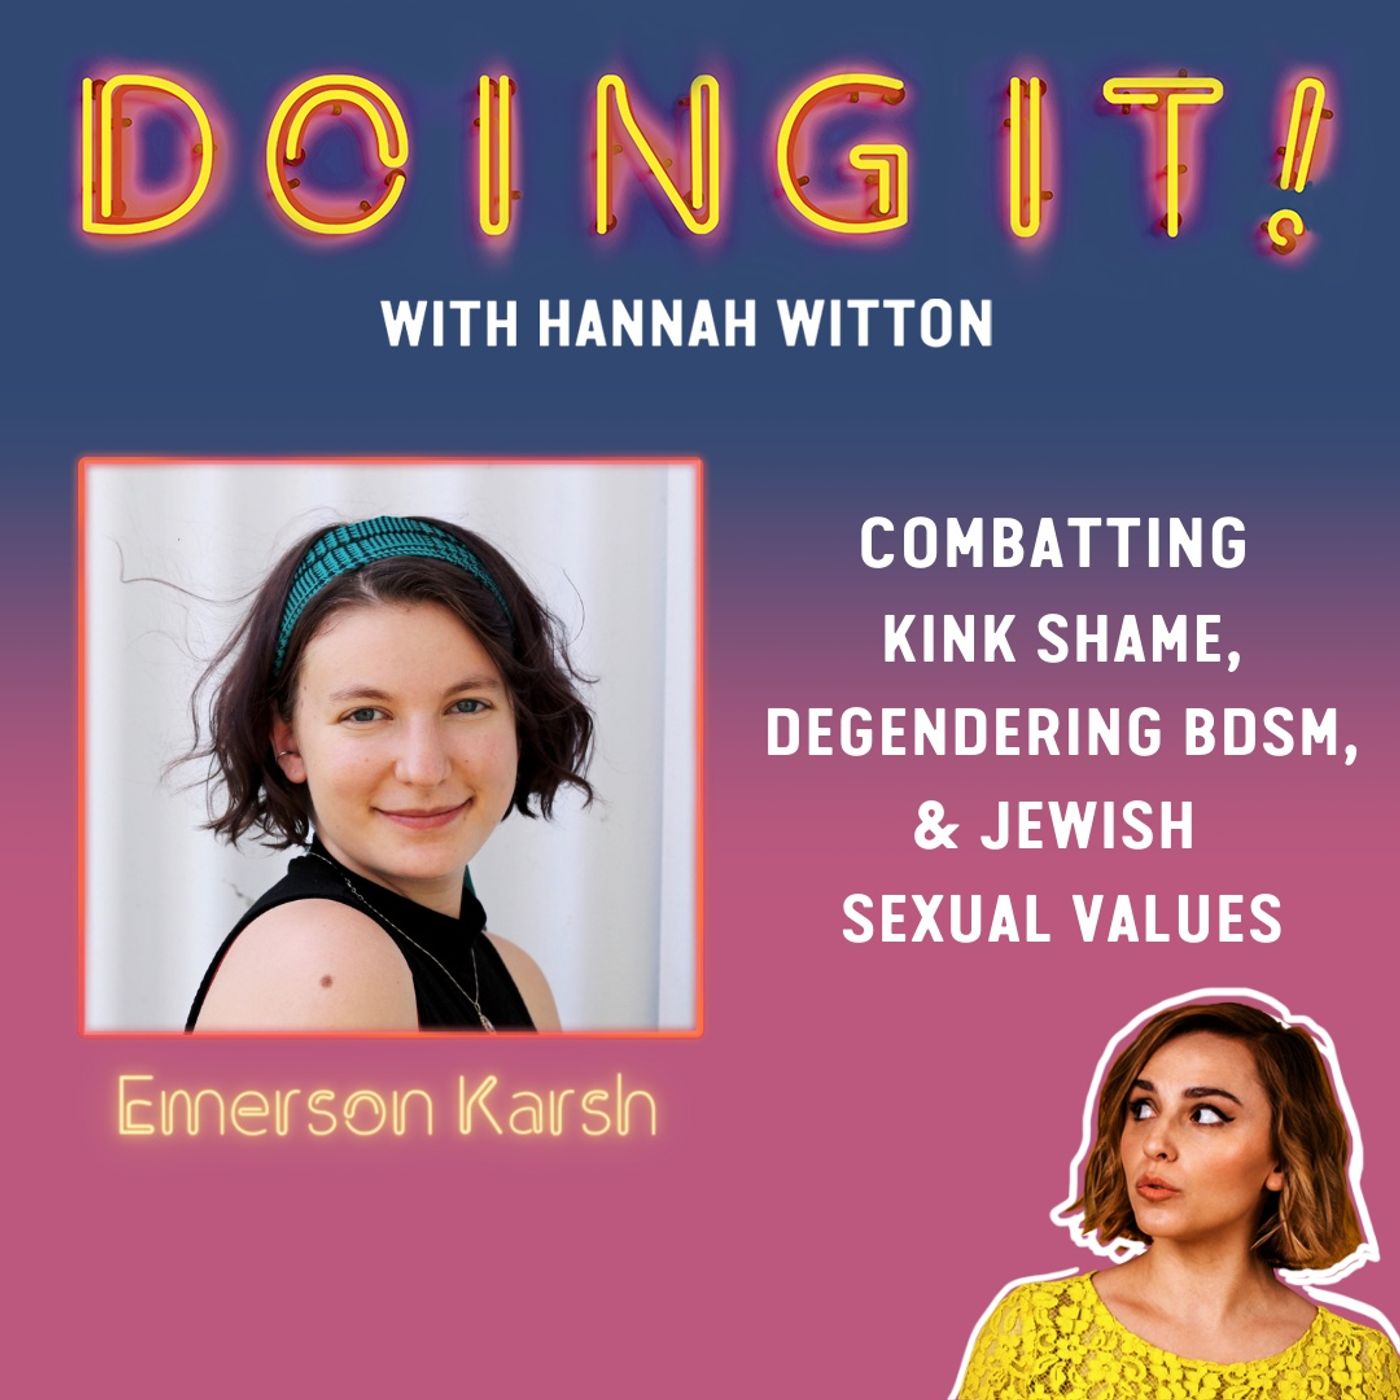 Combating Kink Shame, De-Gendering BDSM & Jewish Sexual Values with Emerson Karsh